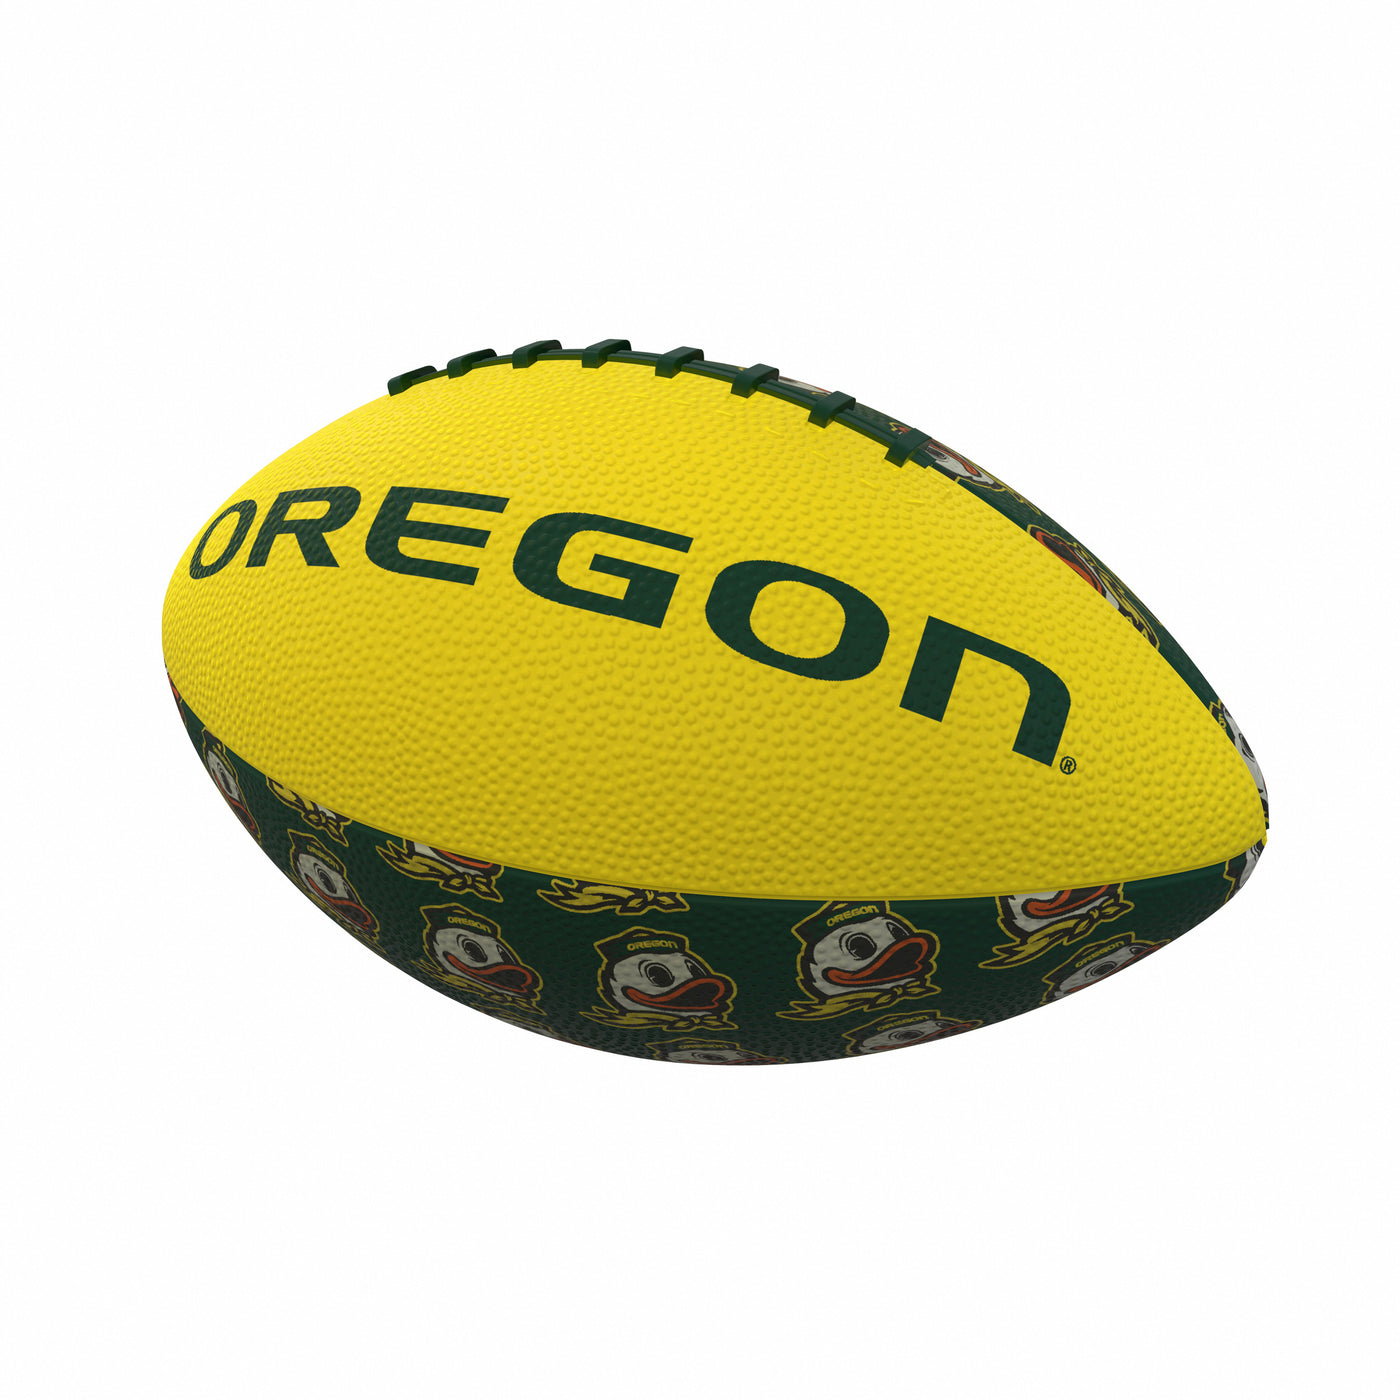 Oregon Repeating Mini-Size Rubber Football